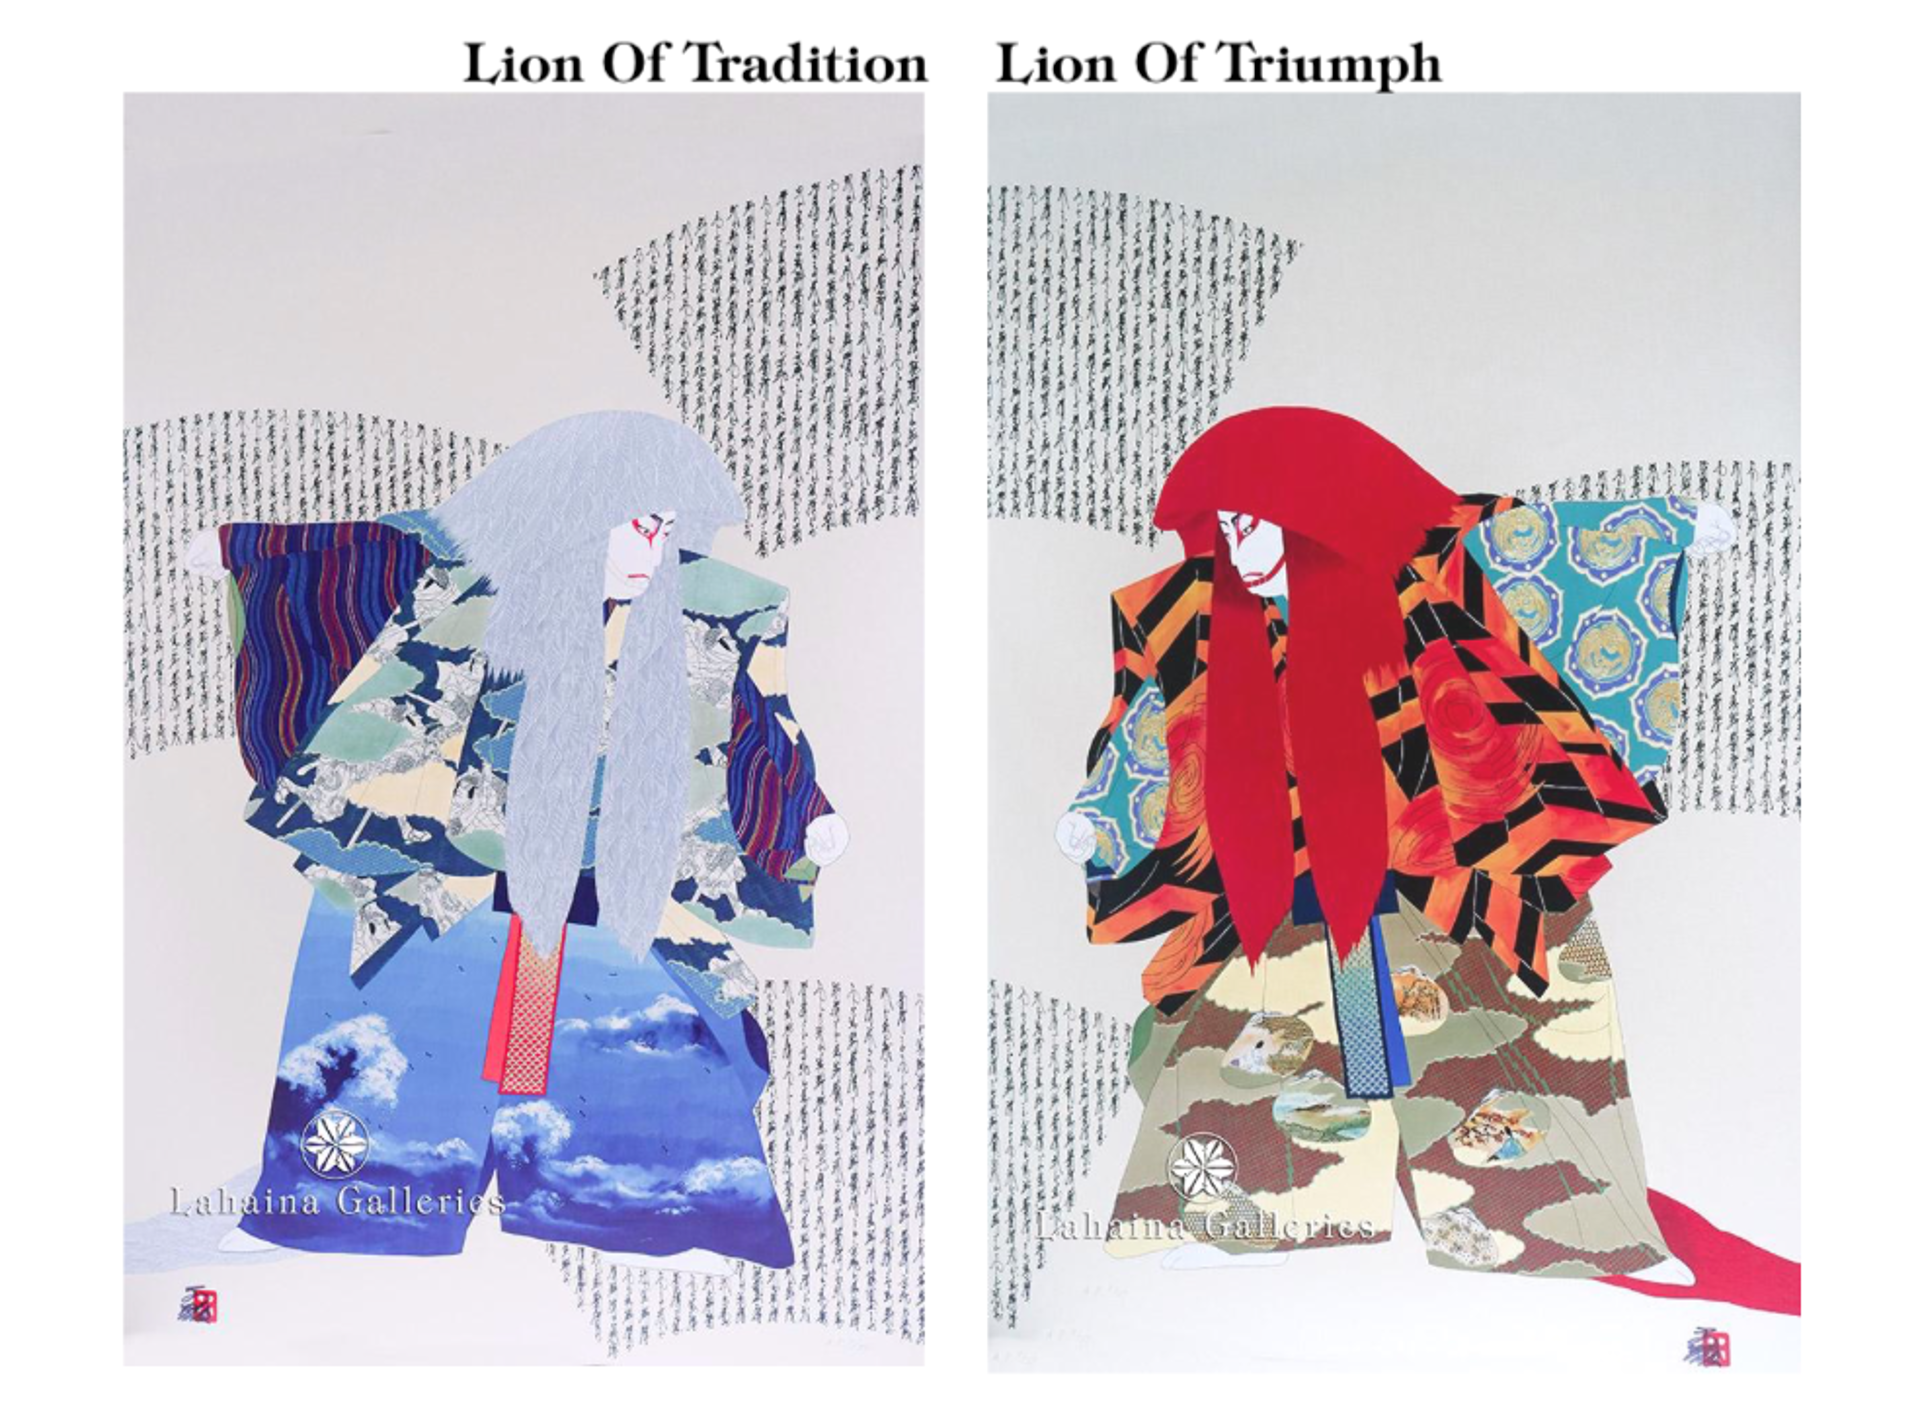 Lion Of Tradition by Hisashi Otsuka